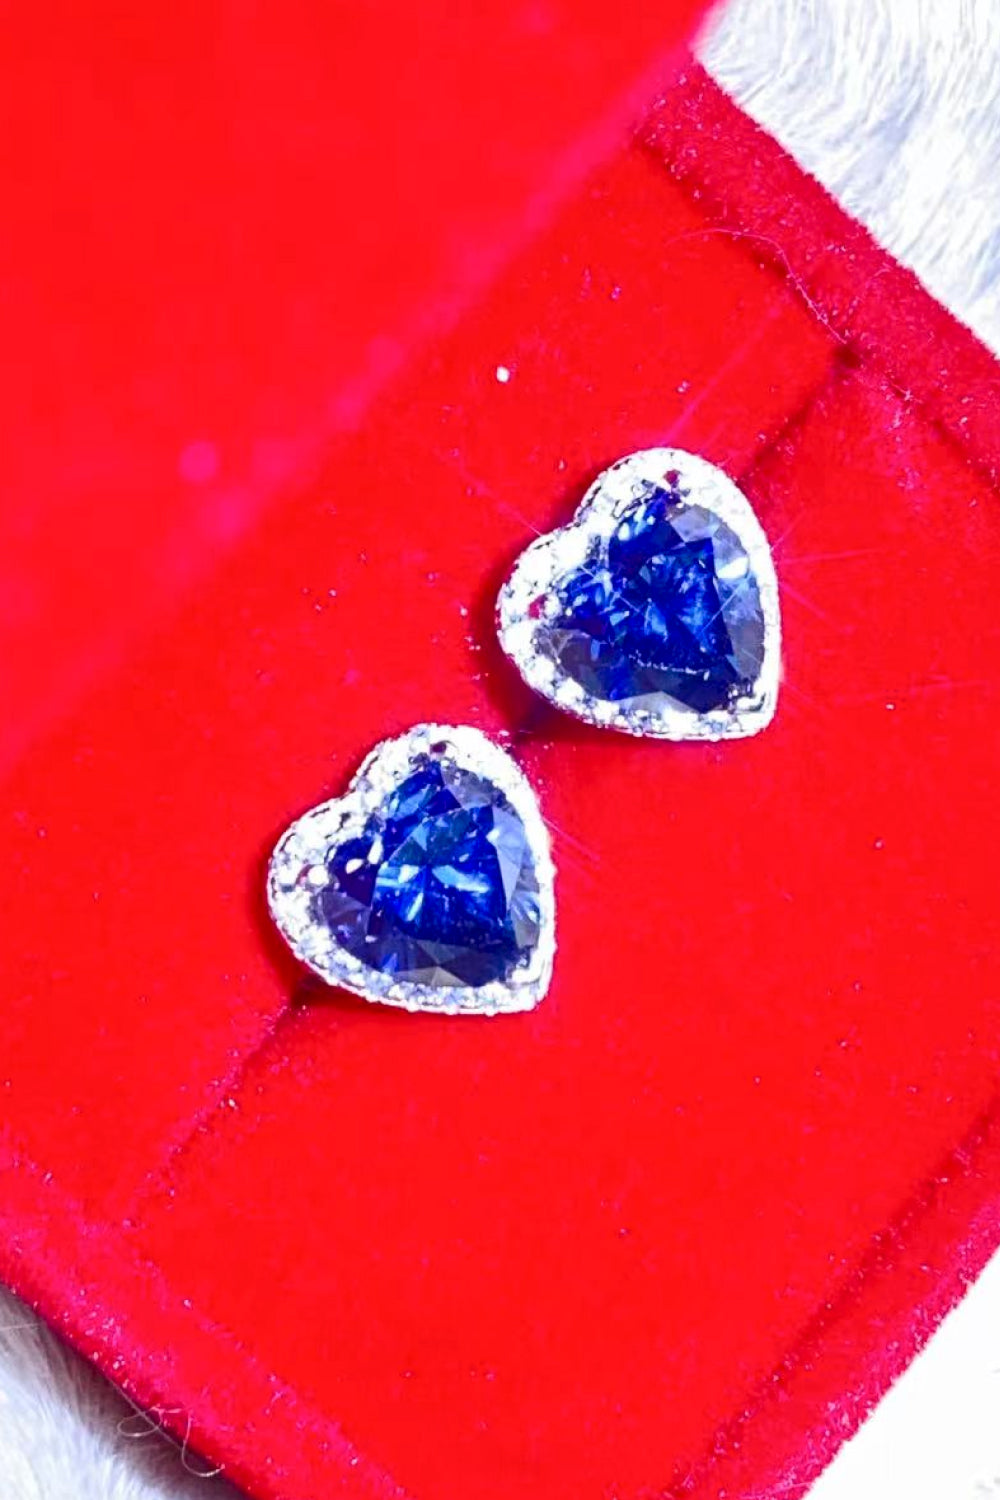 4 Carat Moissanite Heart-Shaped Stud Earrings - Dash Trend